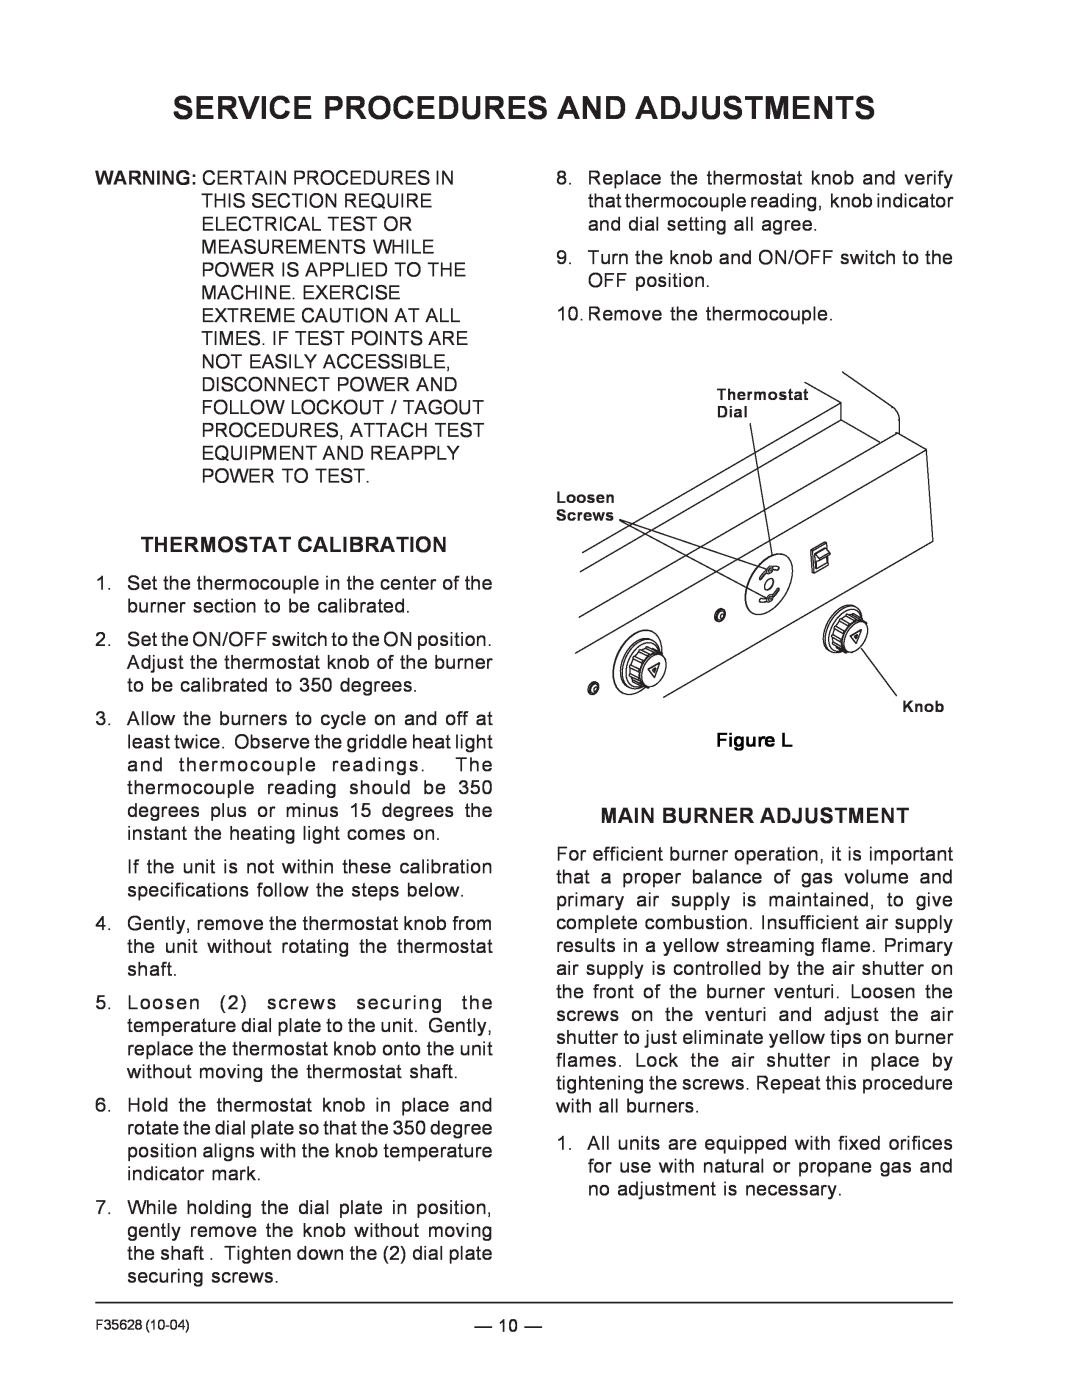 Vulcan-Hart service manual Service Procedures And Adjustments, Thermostat Calibration, Main Burner Adjustment, Figure L 